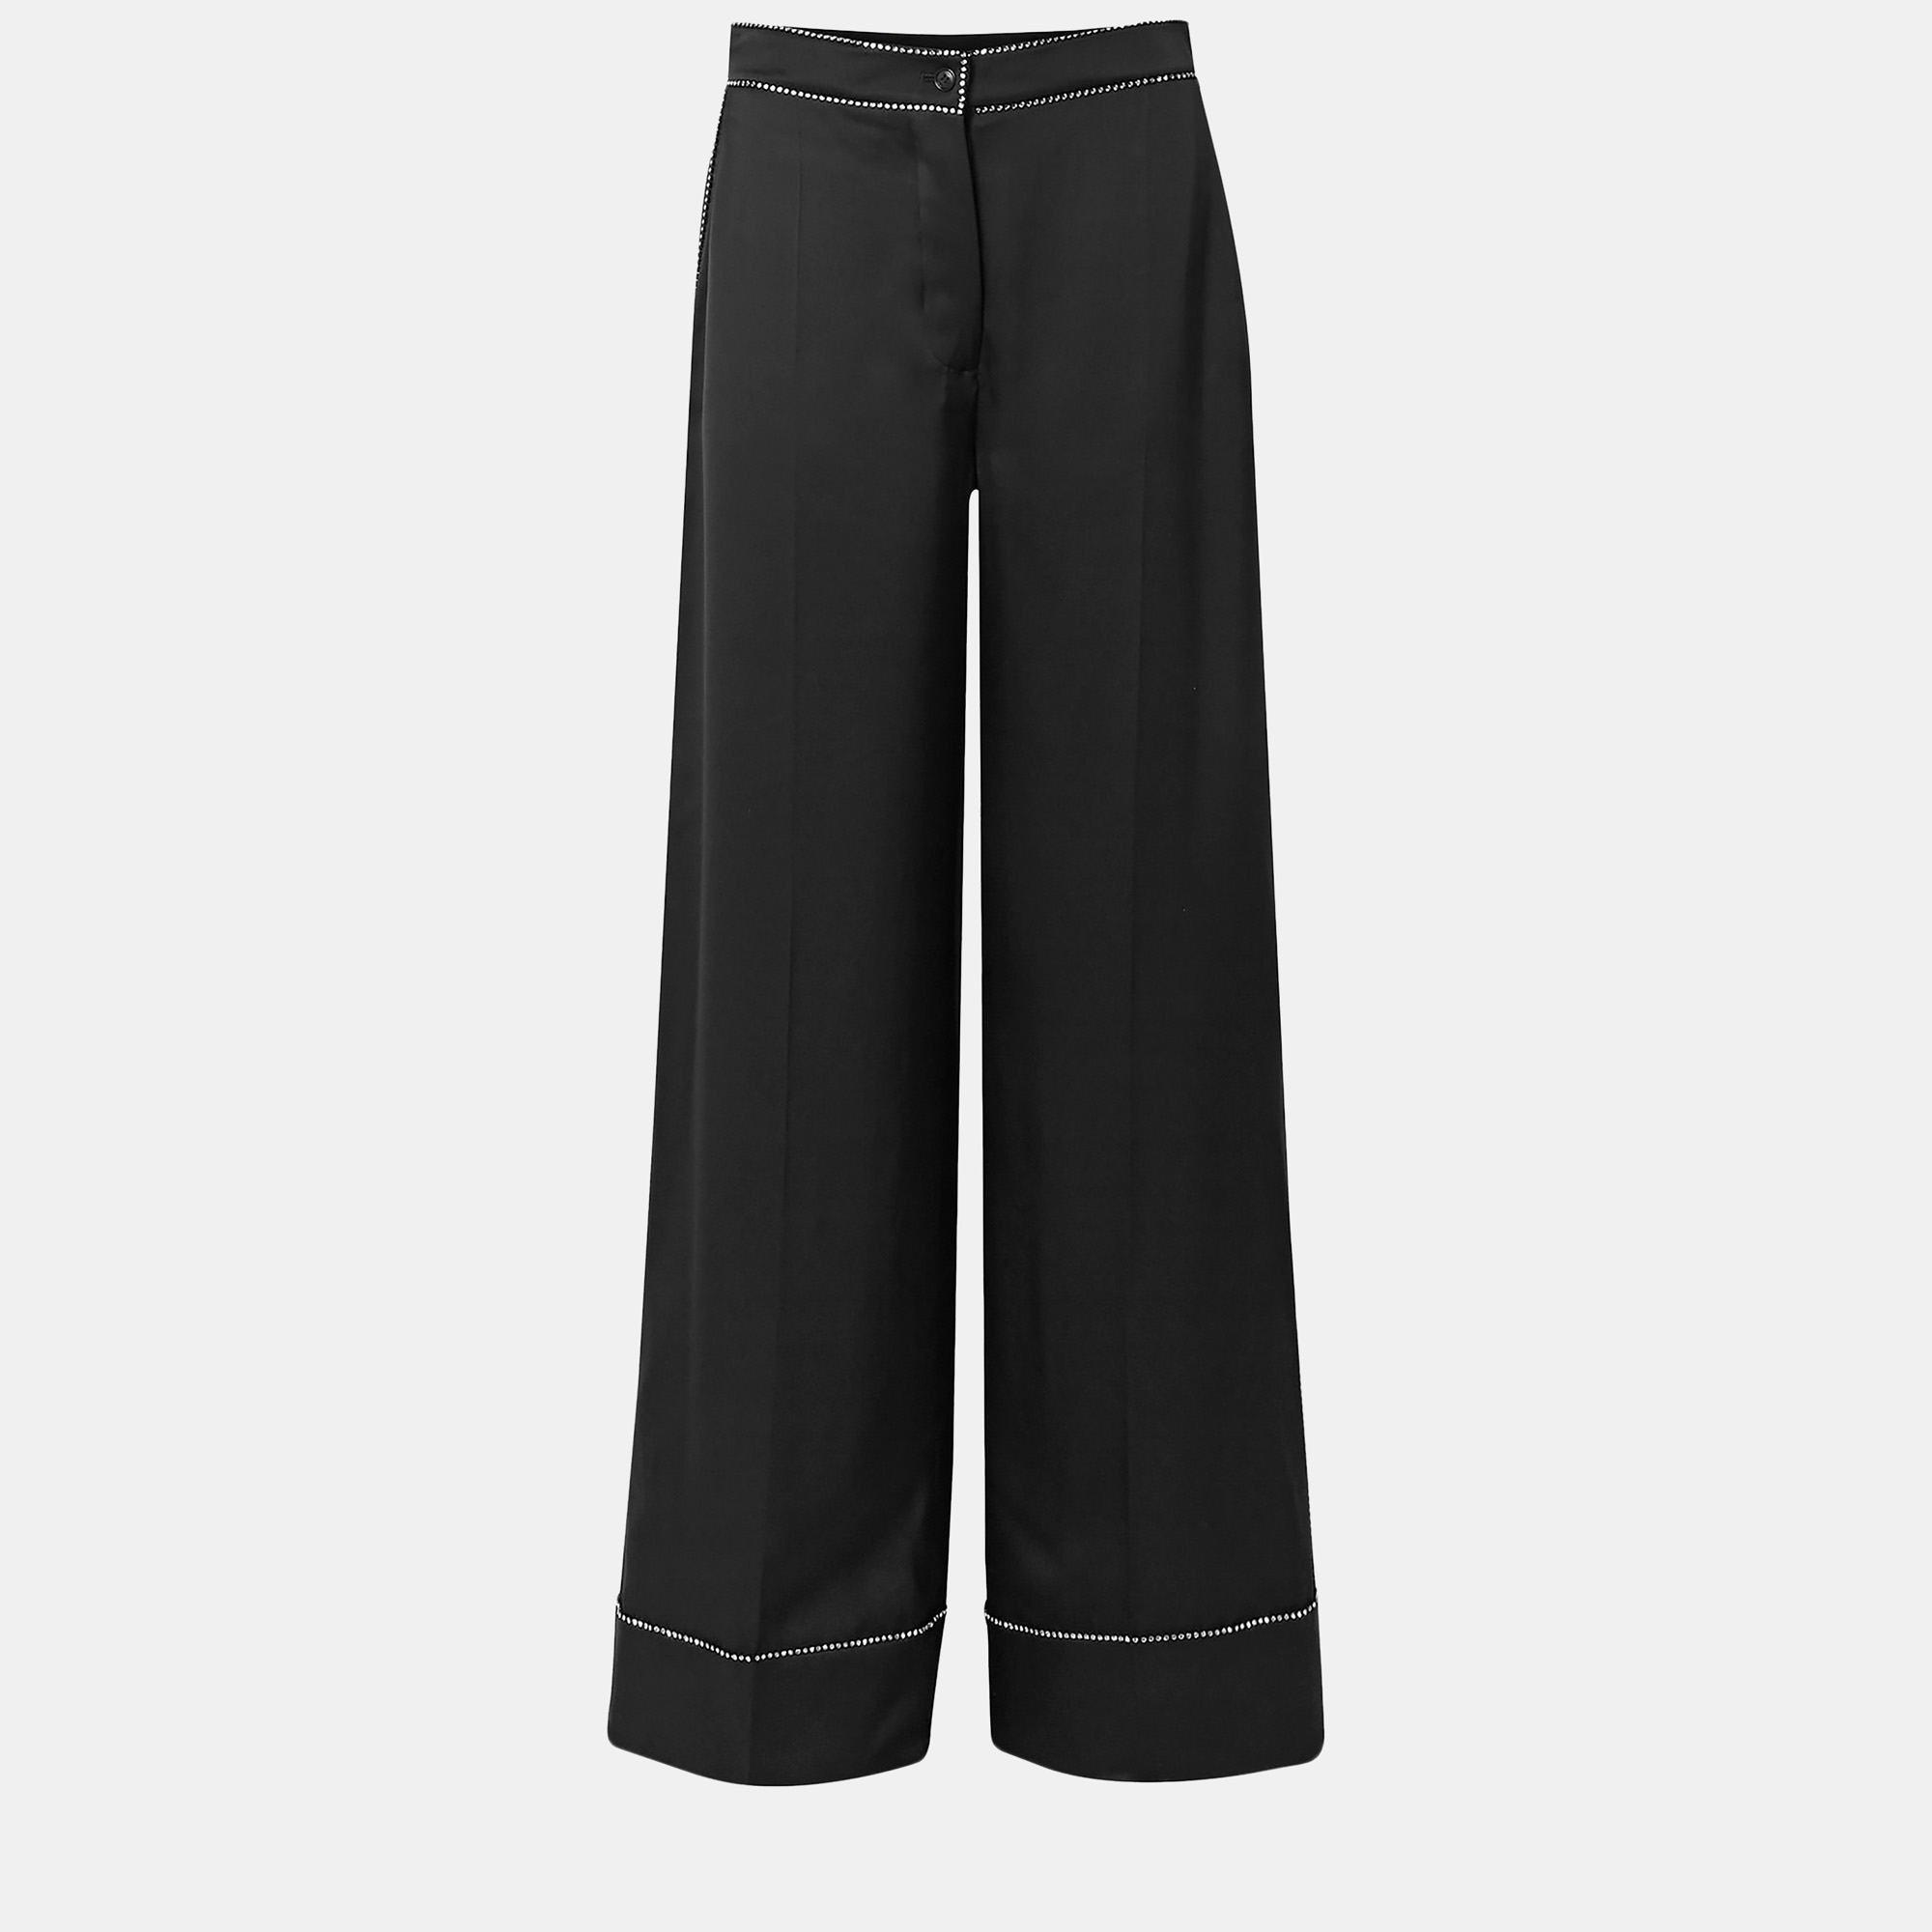 Burberry black silk wide leg pants xl (uk 14)